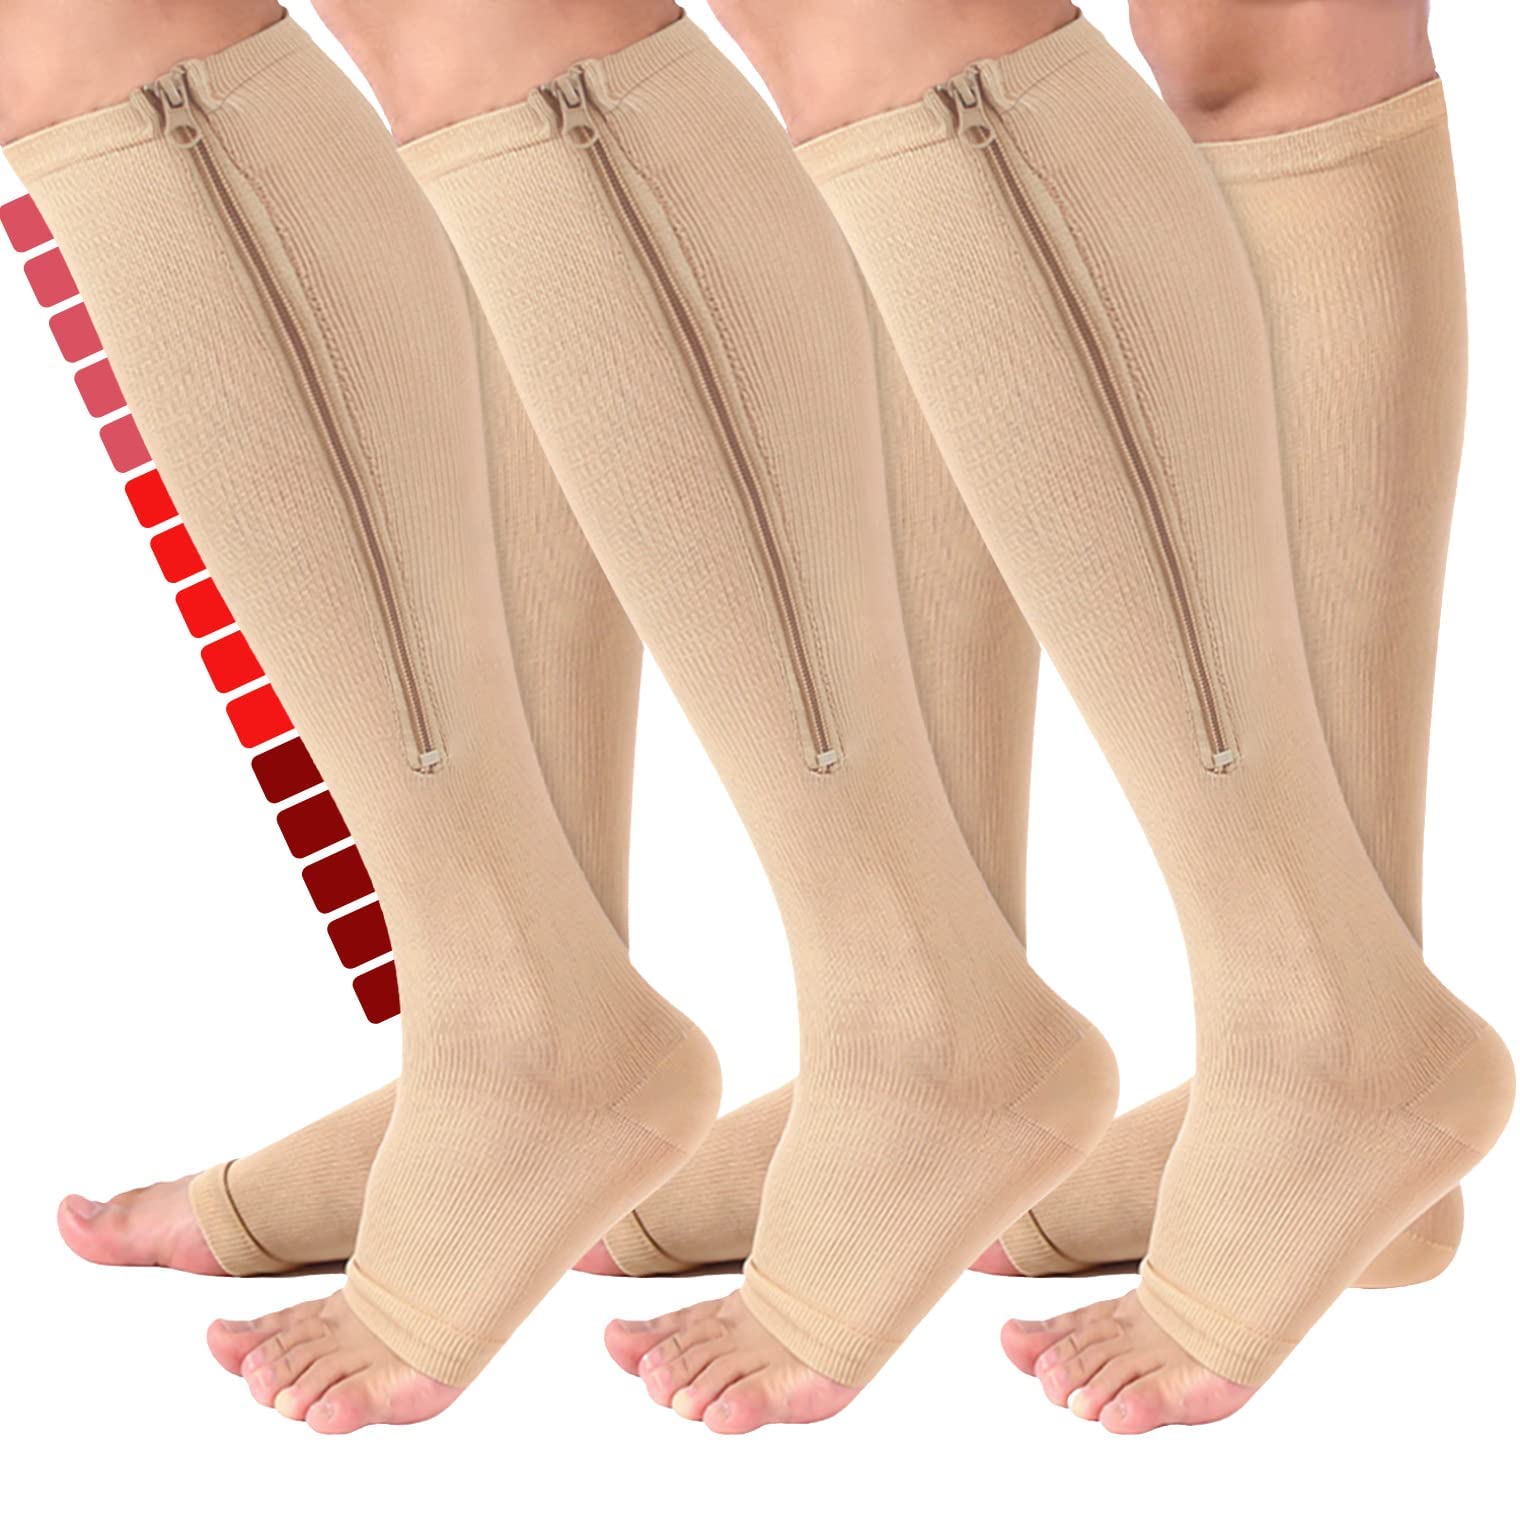 Iseasoo 3 Pairs Zippre Compression Socks - Calf Knee High Open Toe